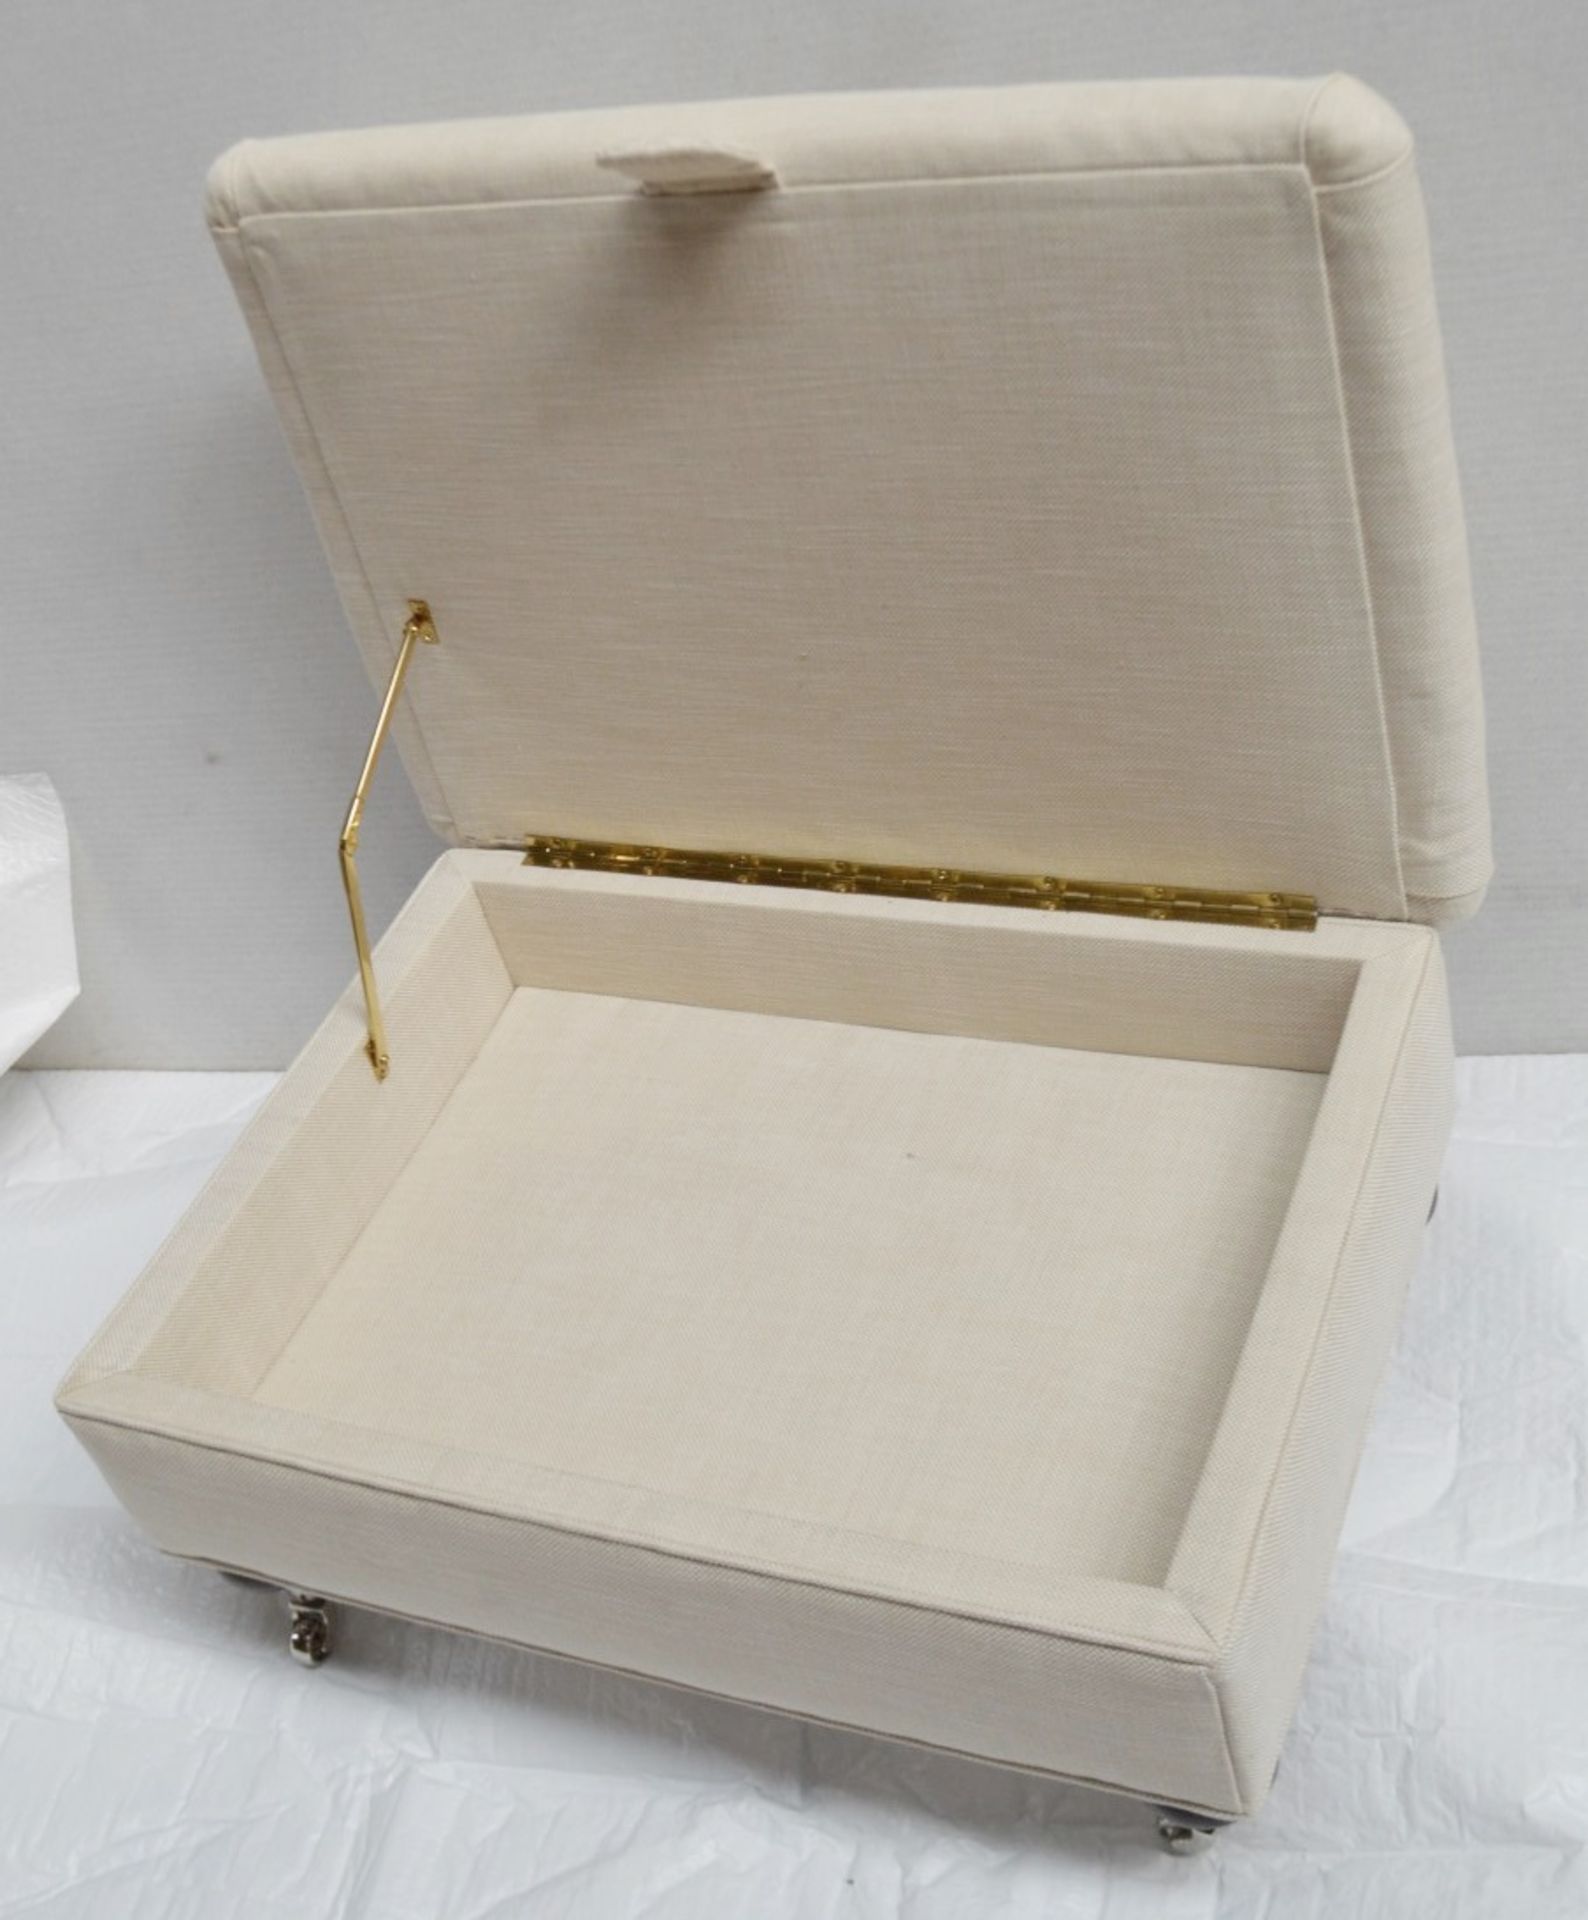 1 x DURESTA Ruskin Foot Stool Storage Box In Cream - Dimensions: W74 x D53 x H35cm - RRP £1,219 - Image 2 of 6